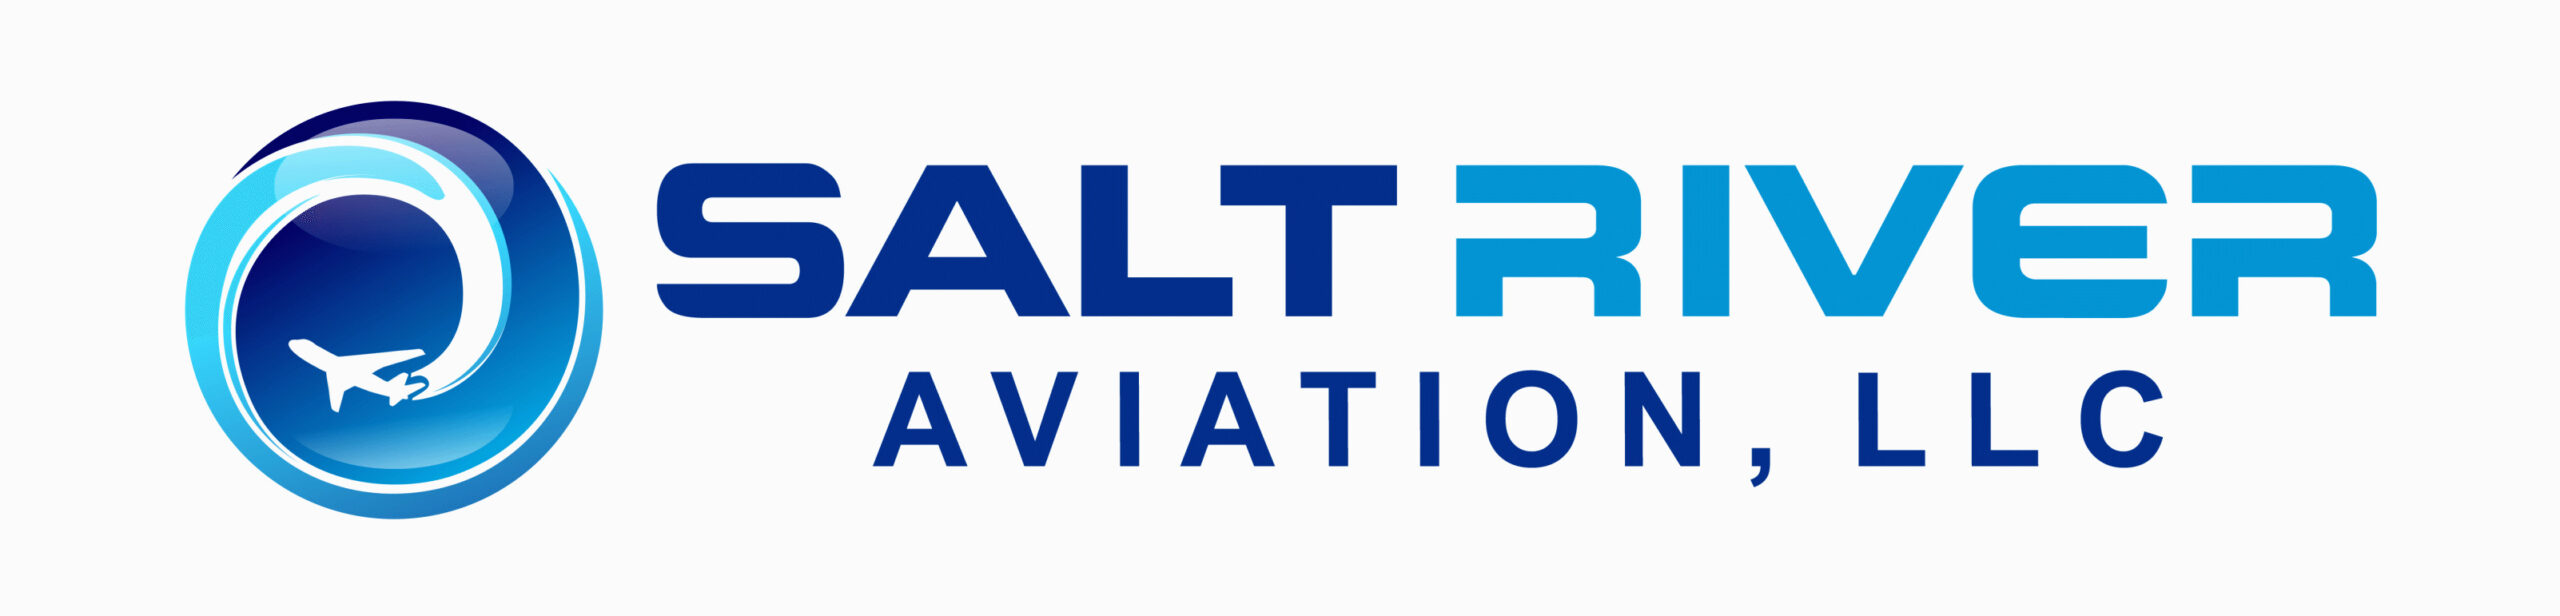 Salt River Aviation, LLC logo